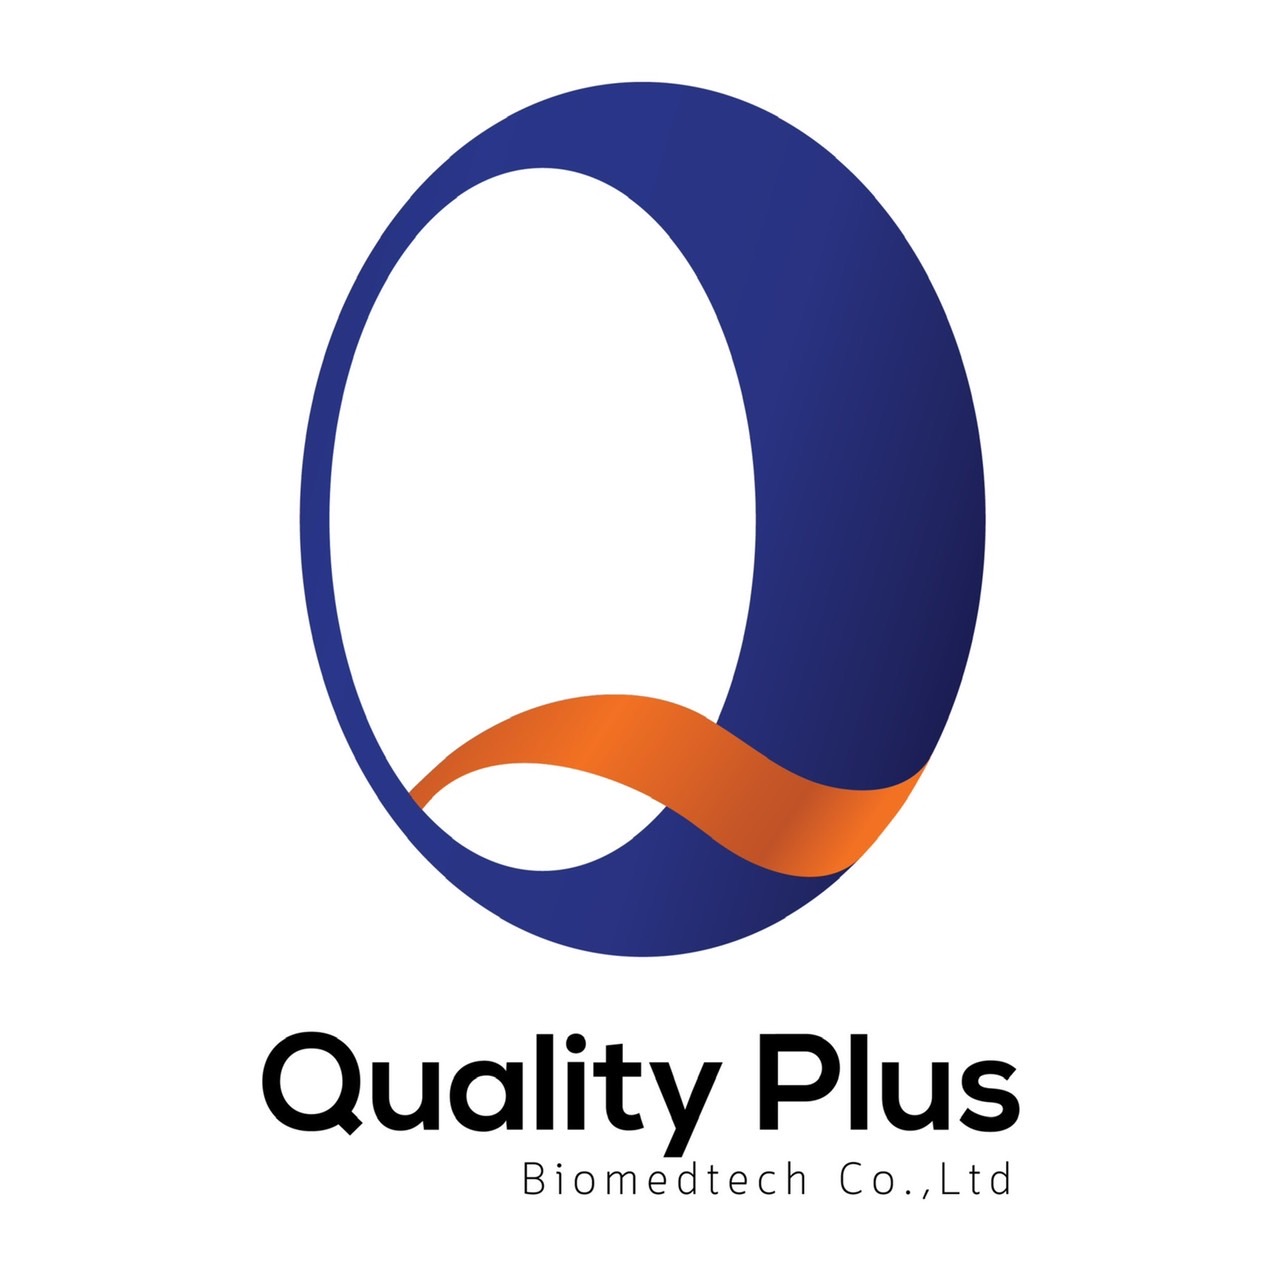 Quality Plus Biomedtech Co., Ltd.